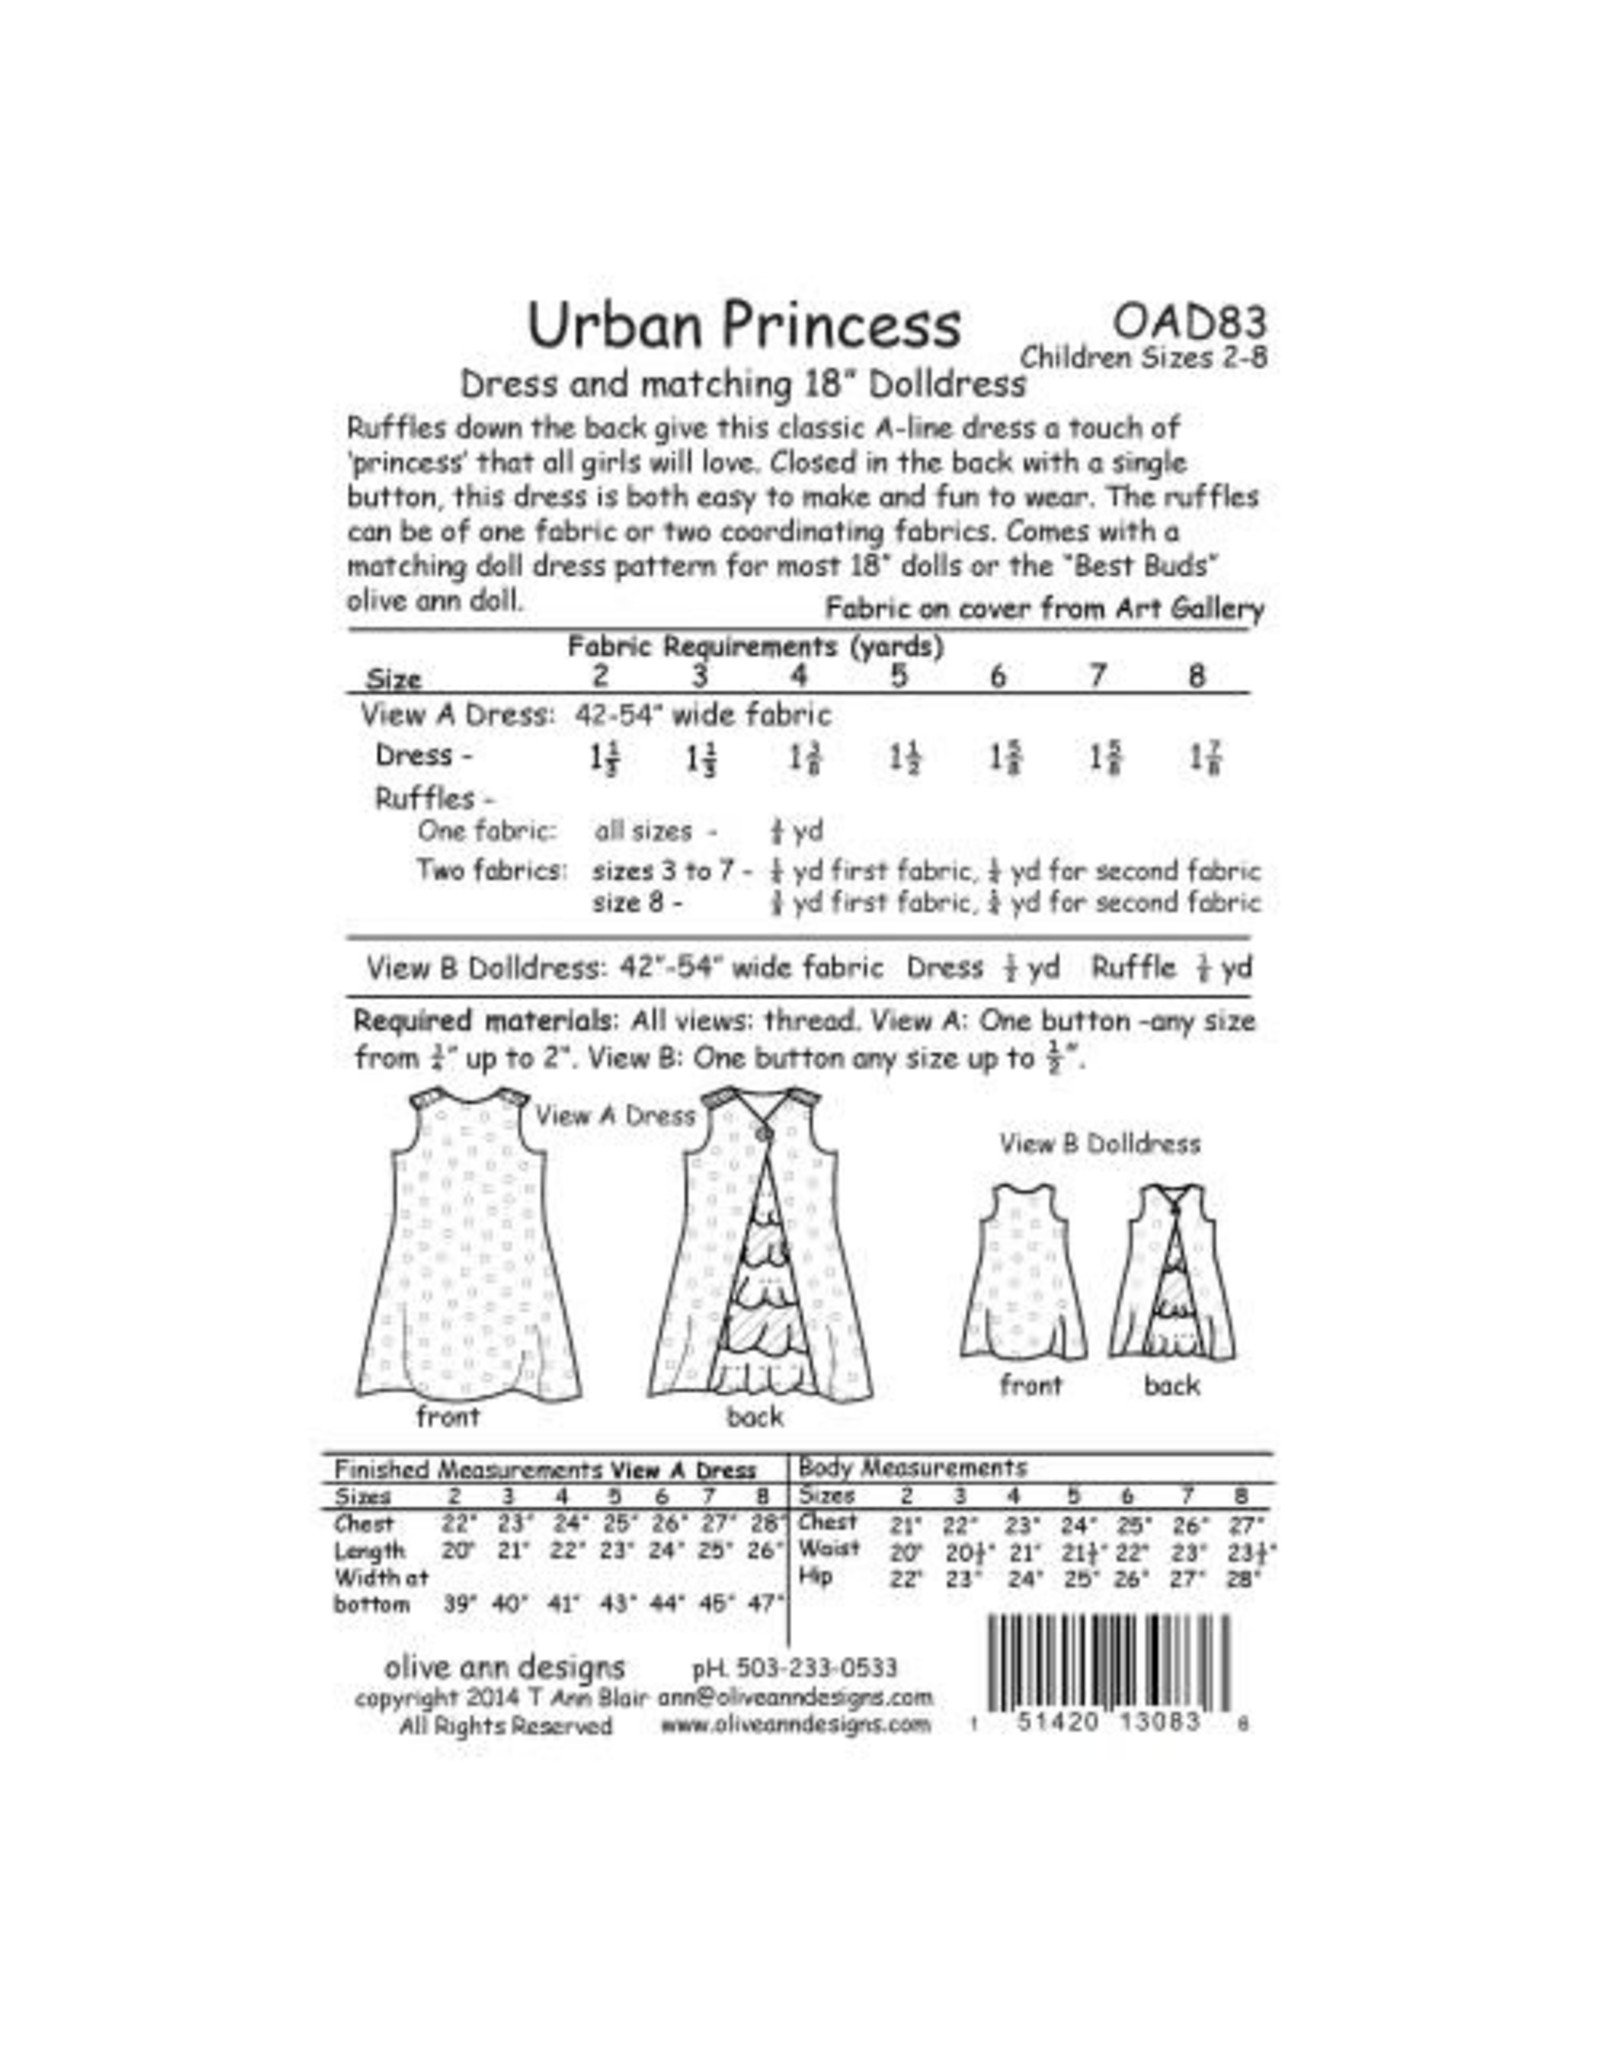 Picking Daisies Urban Princess Dress Pattern for Girls and Dolls